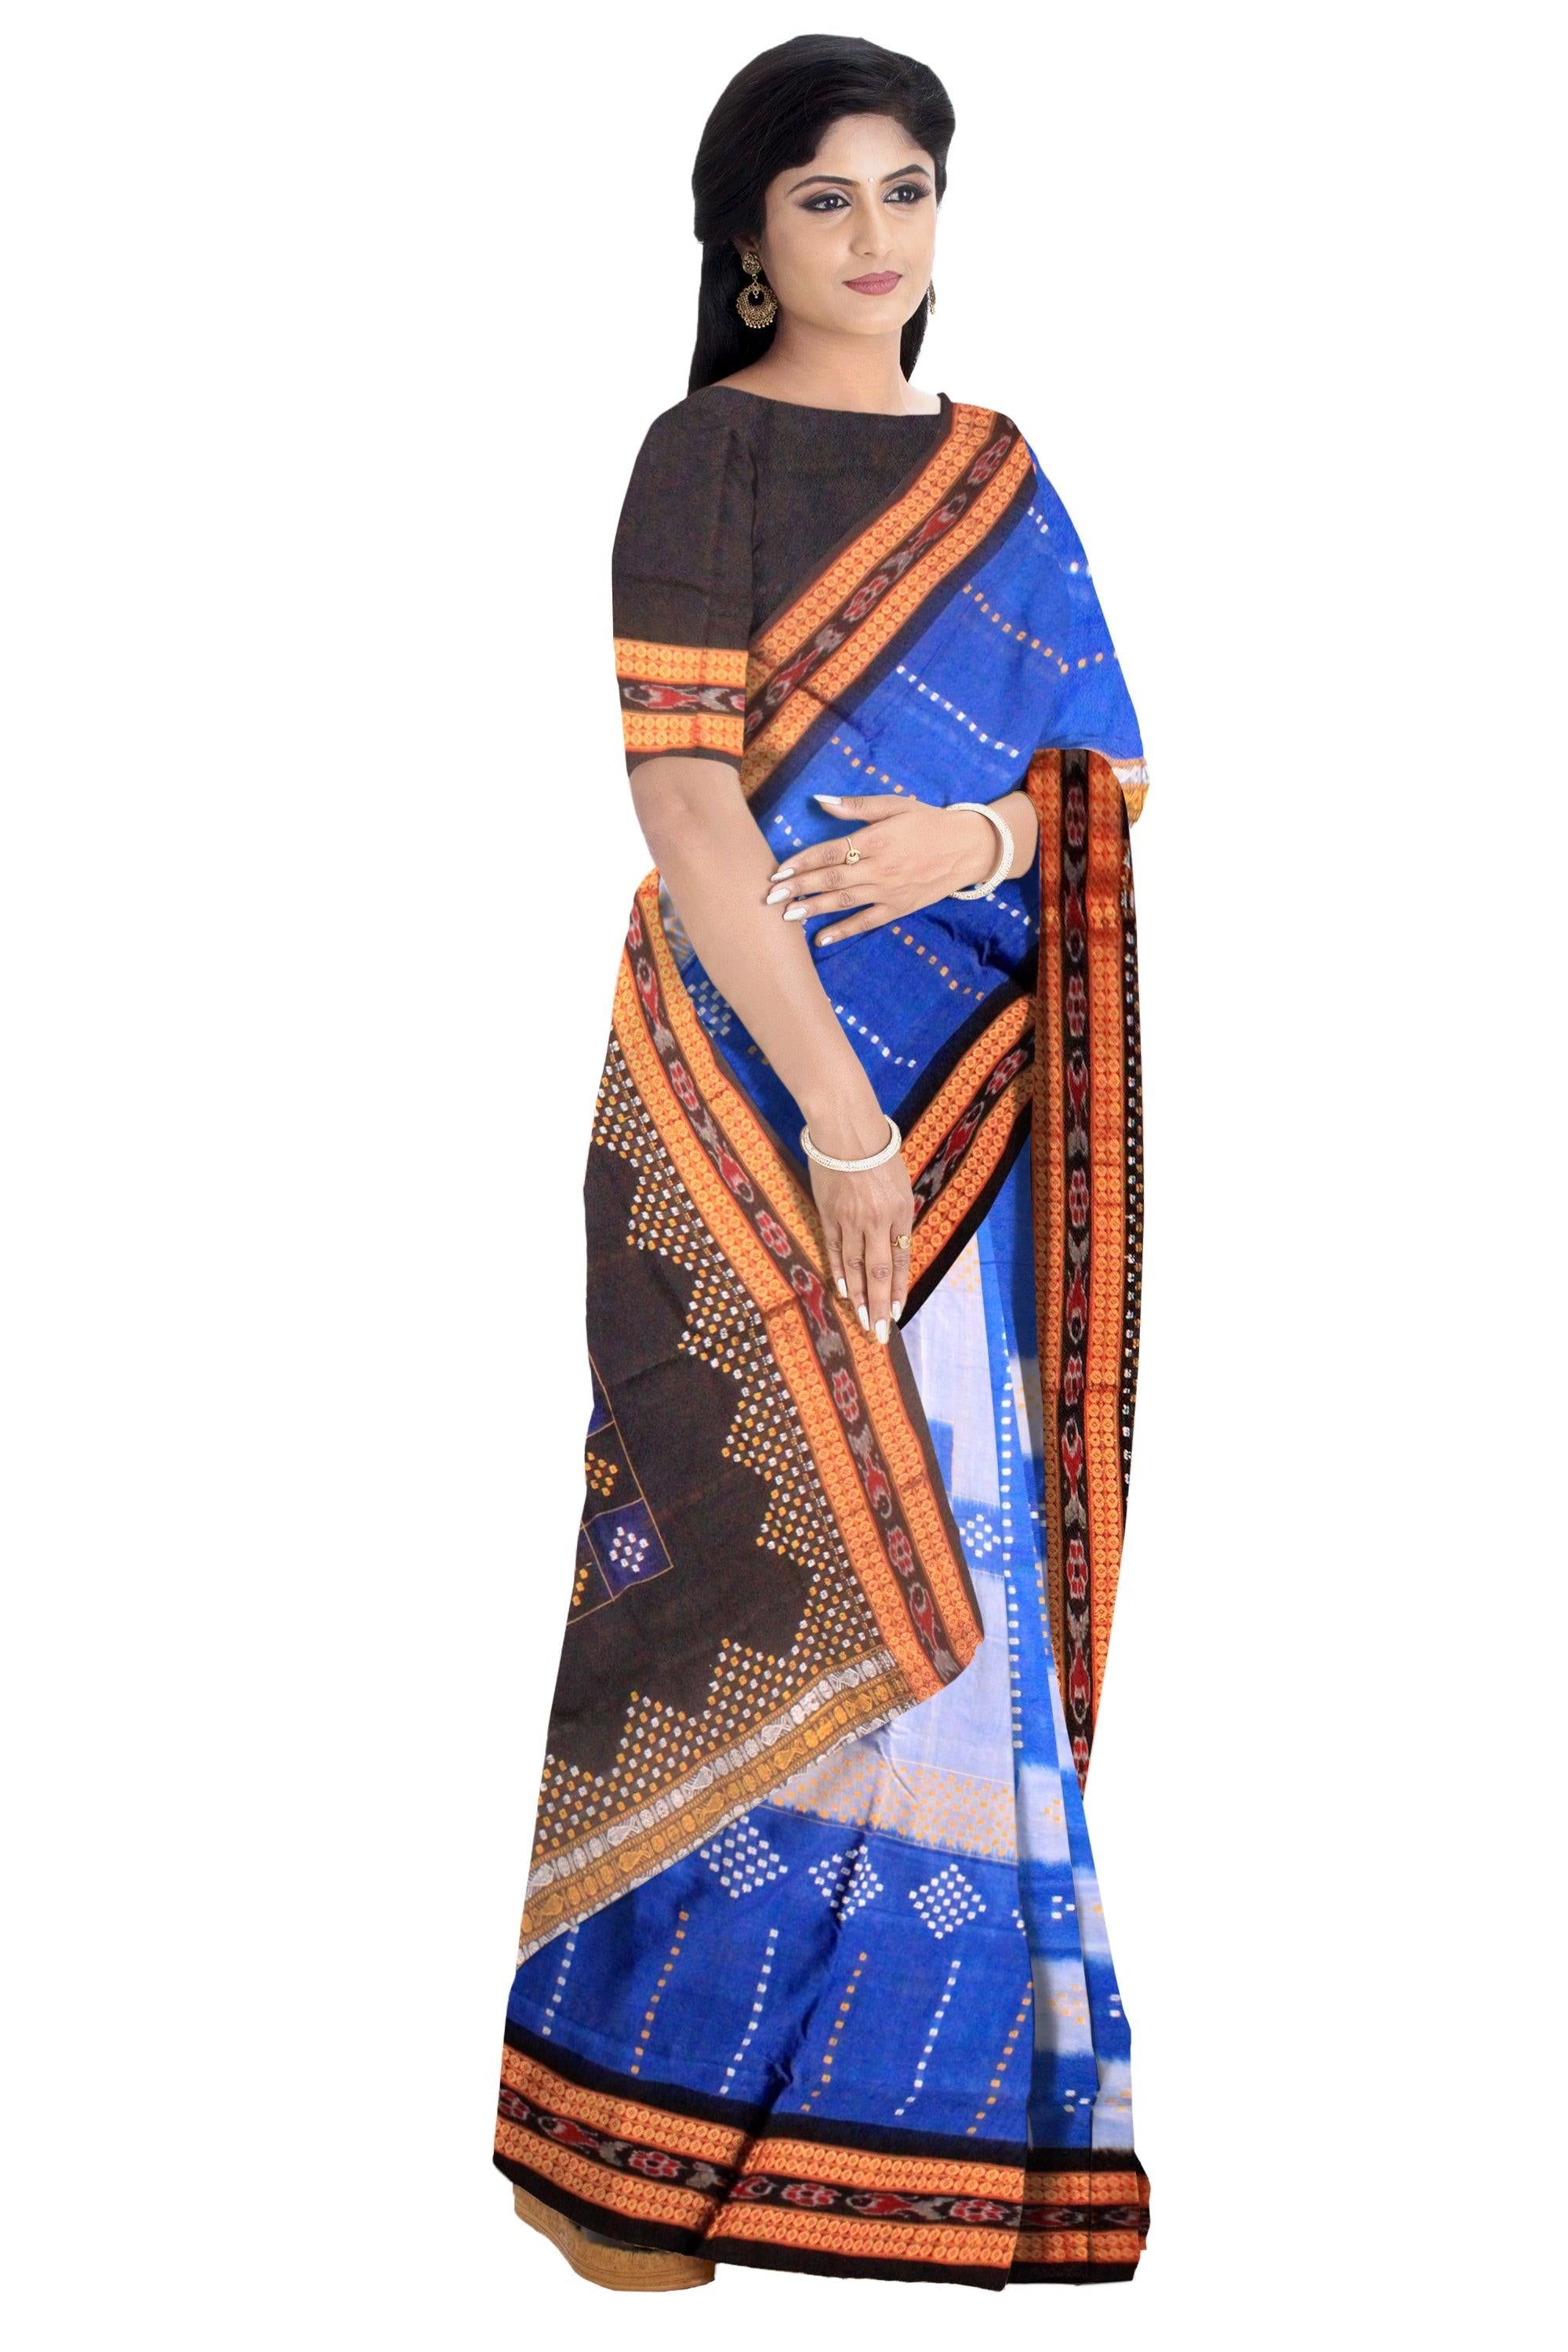 sambalpuri cotton saree in blue , white and black color base, with blouse piece. - Koshali Arts & Crafts Enterprise